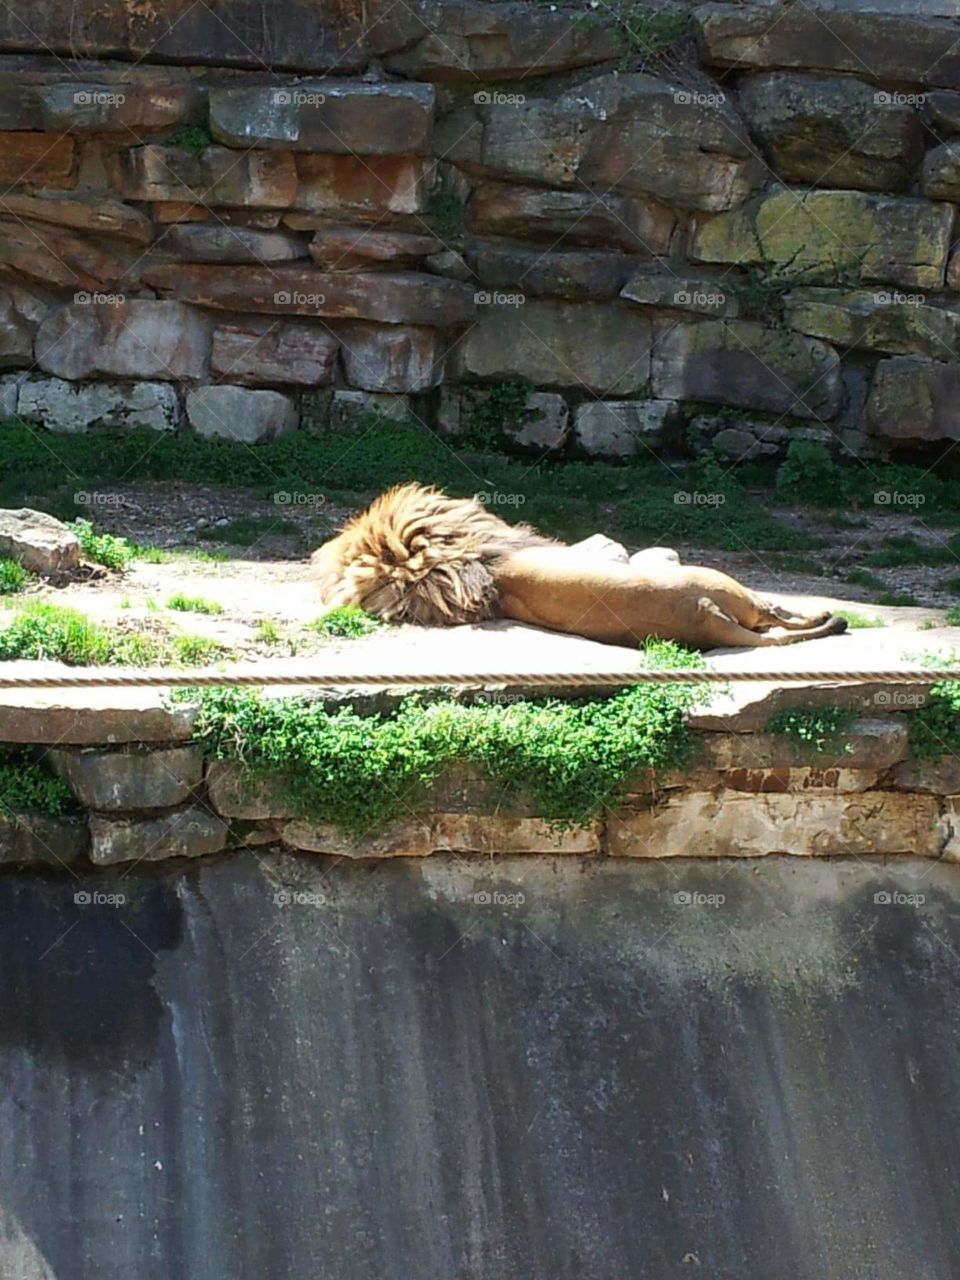 Sleeping Lion At Zoo. lion sleeping at zoo